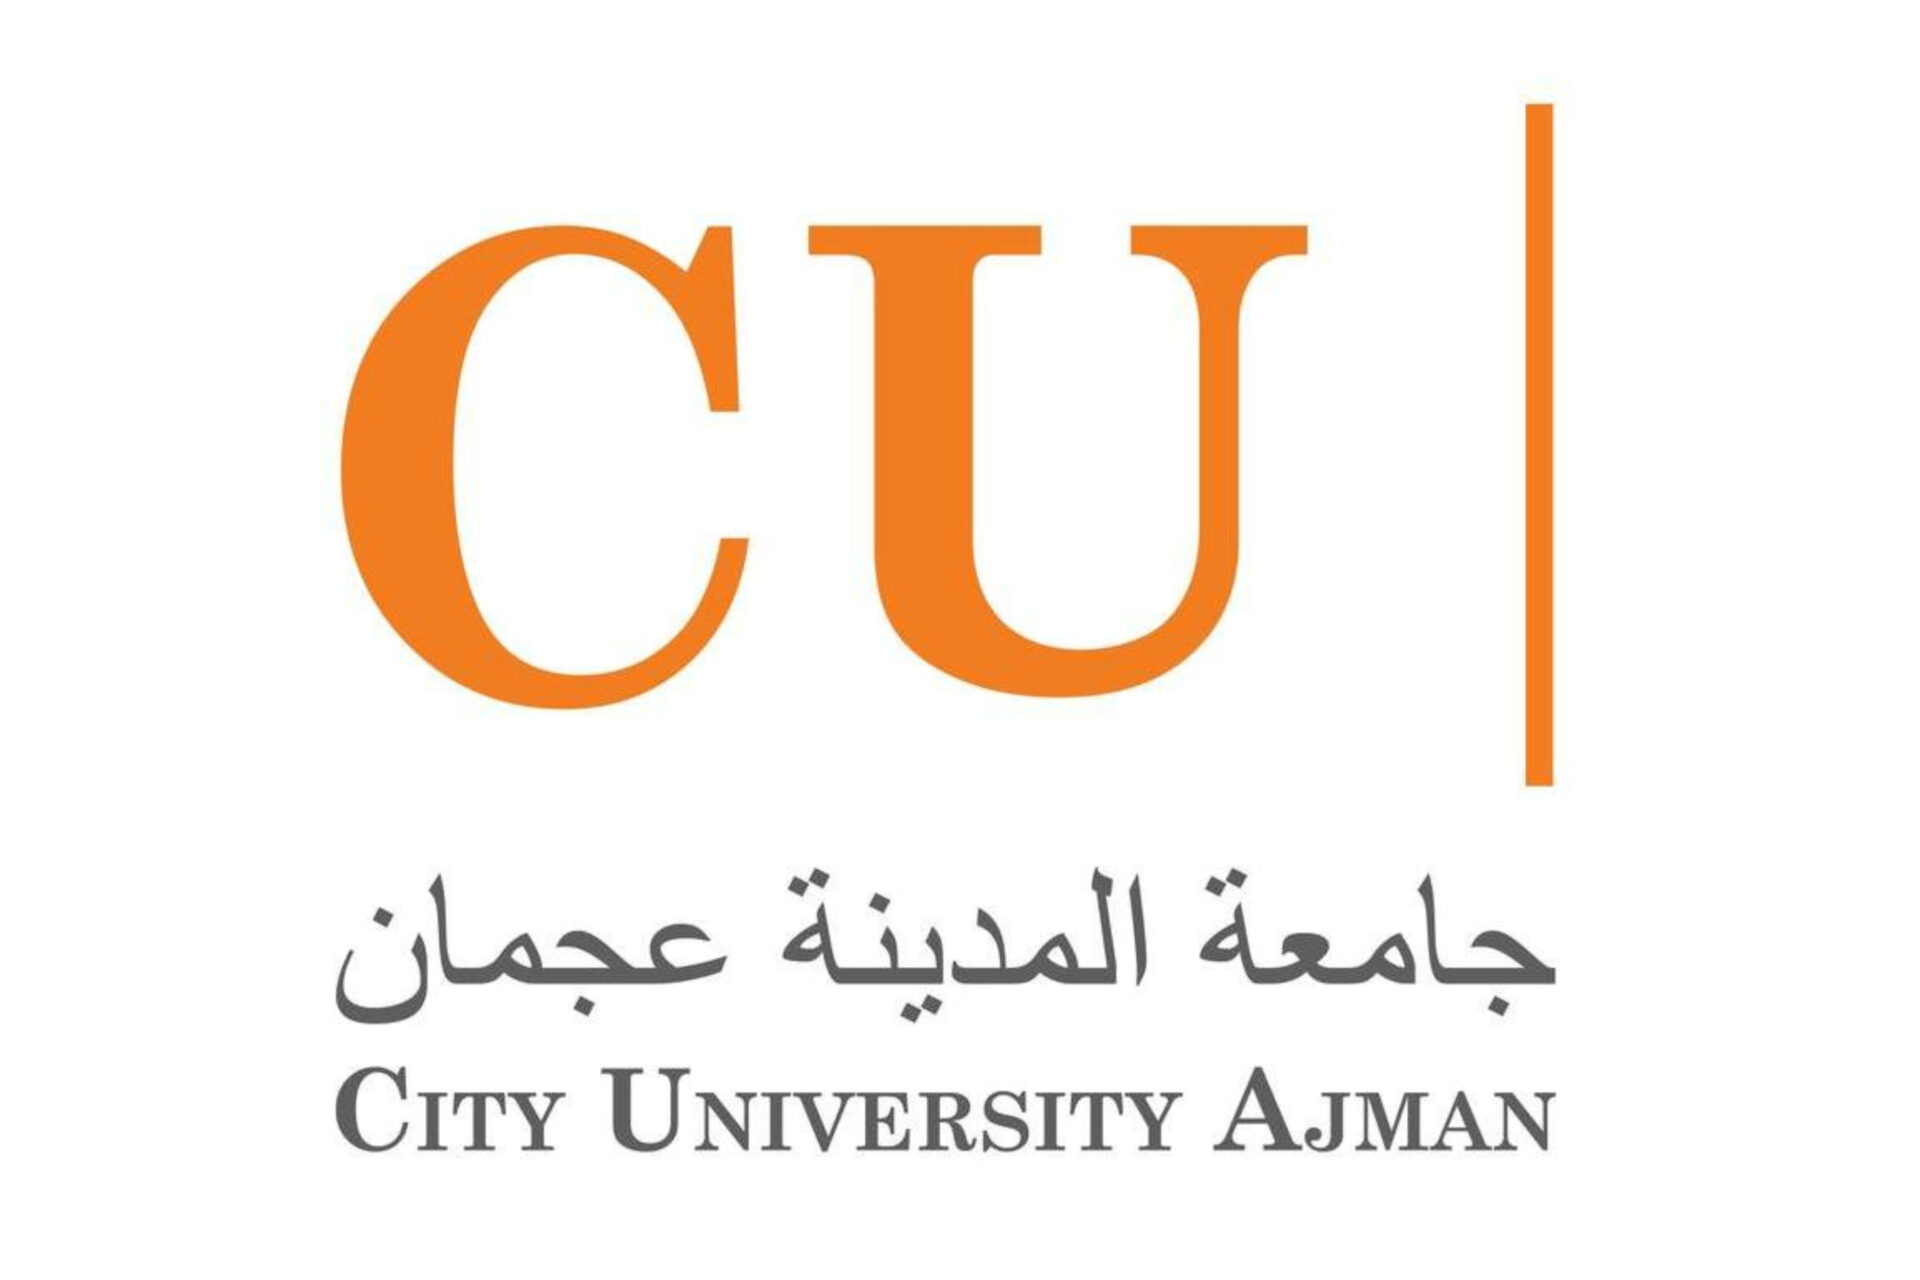 City University College of Ajman